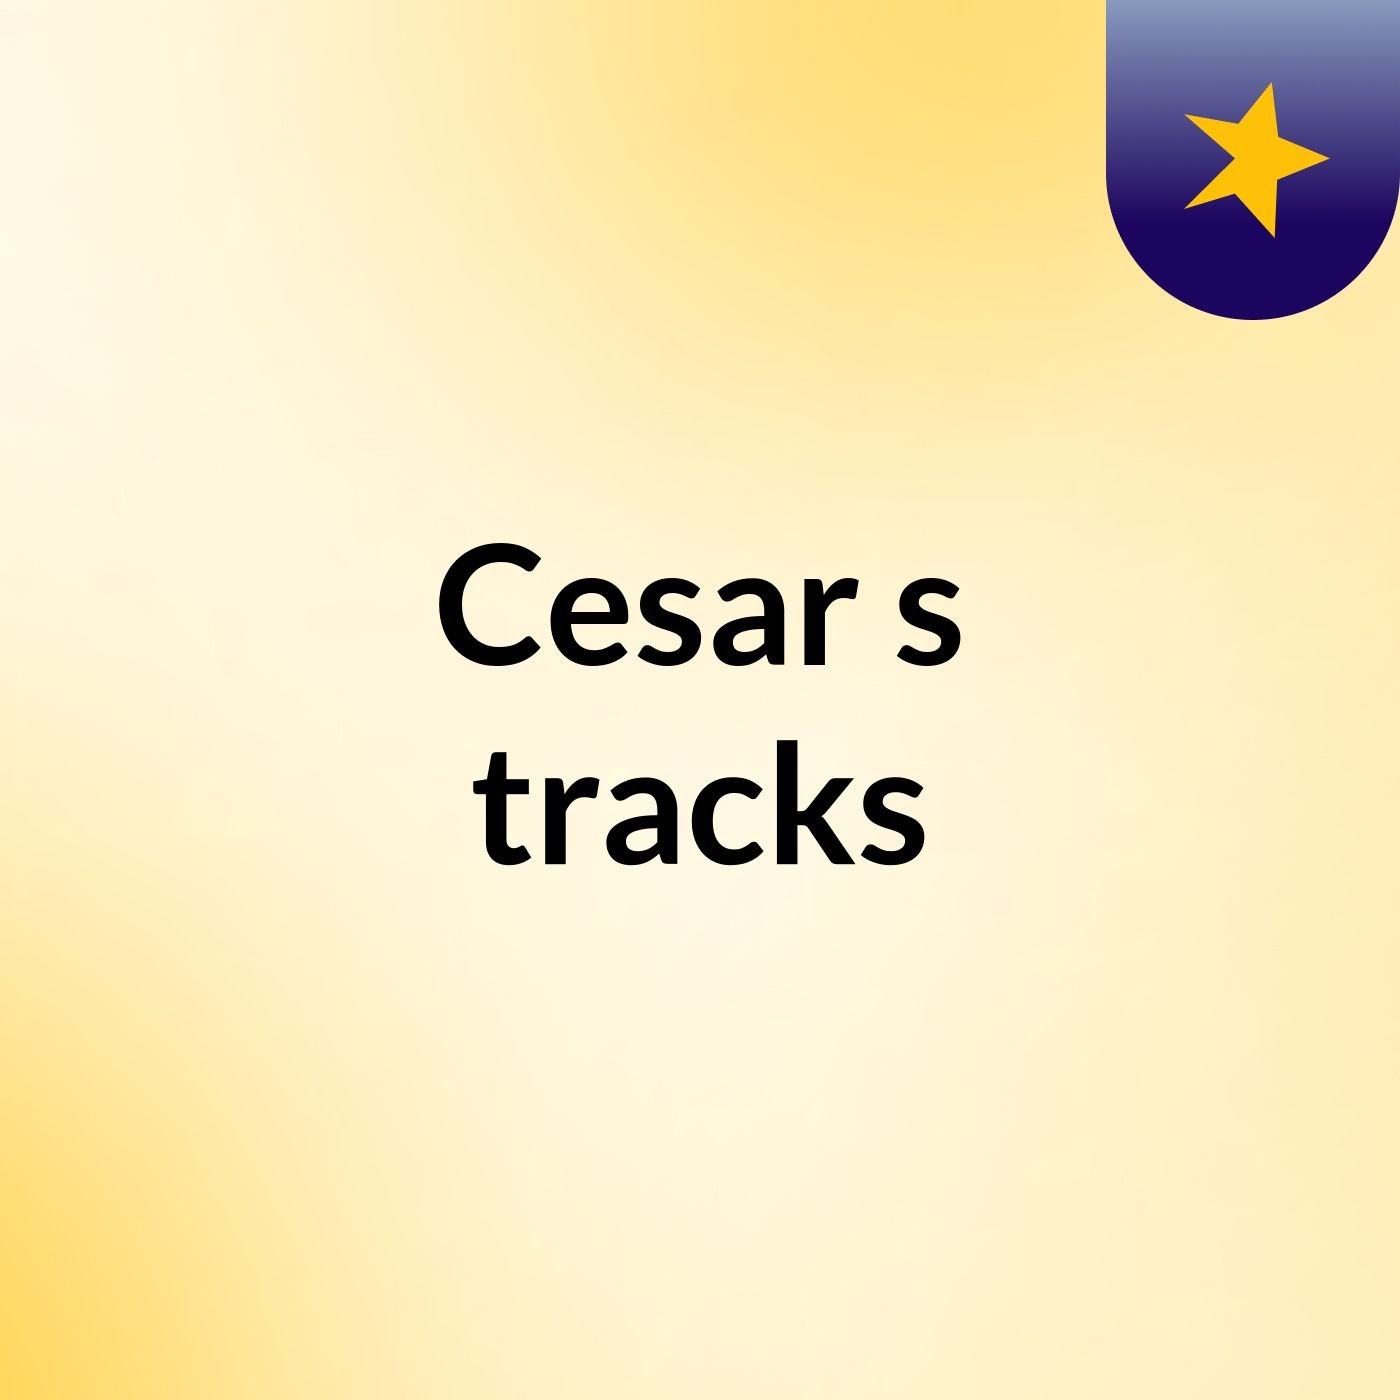 Cesar's tracks